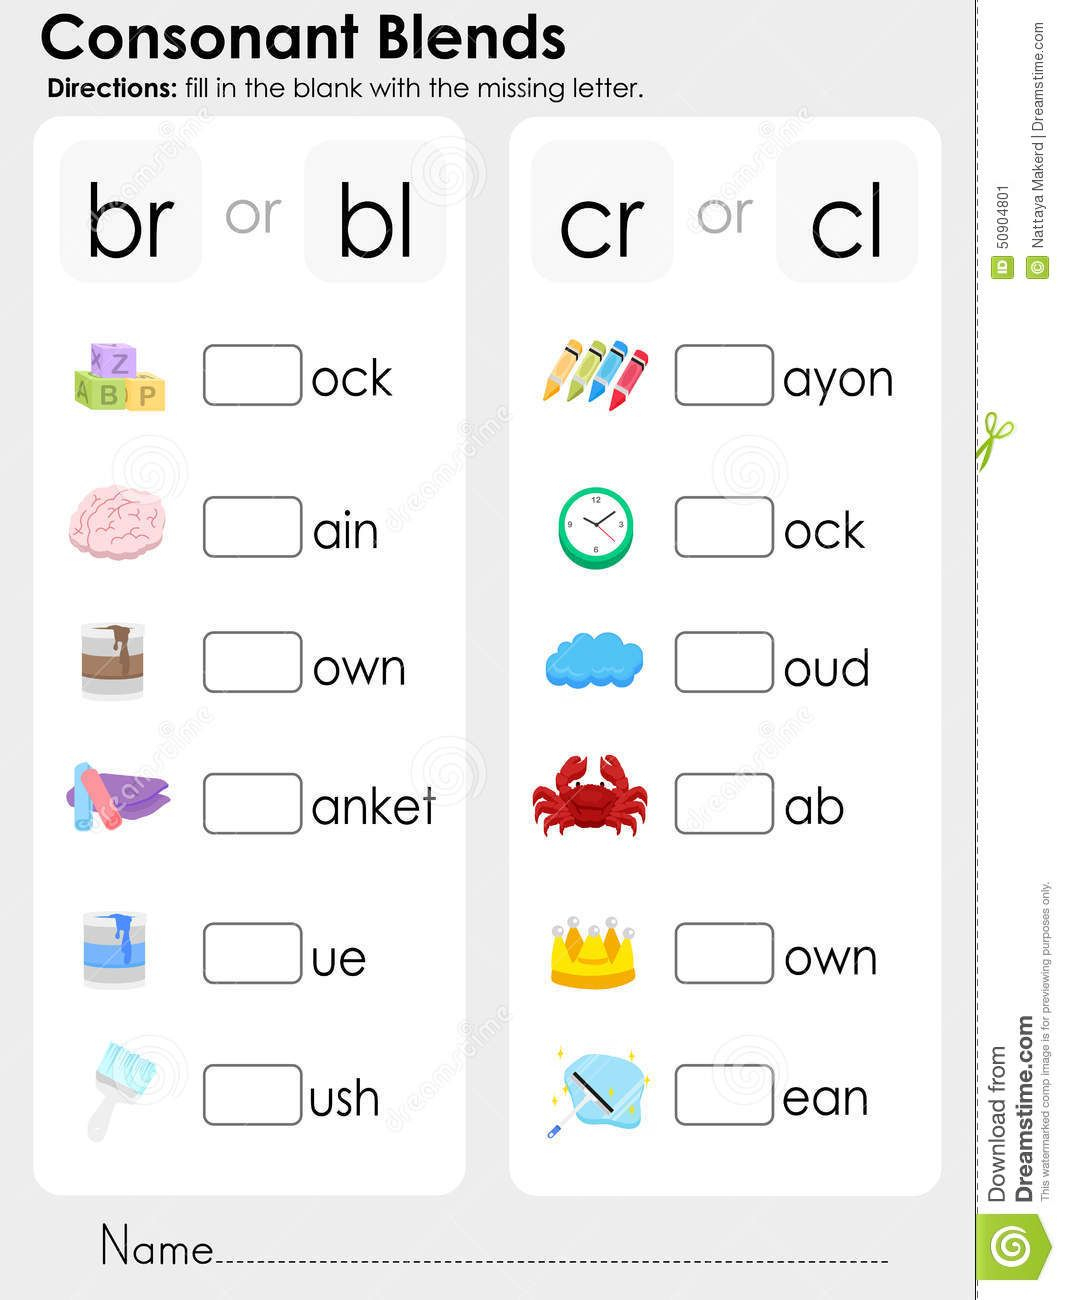 Consonant Blends Worksheets For Kindergarten - Scalien | Second | Free Printable Consonant Blends Worksheets